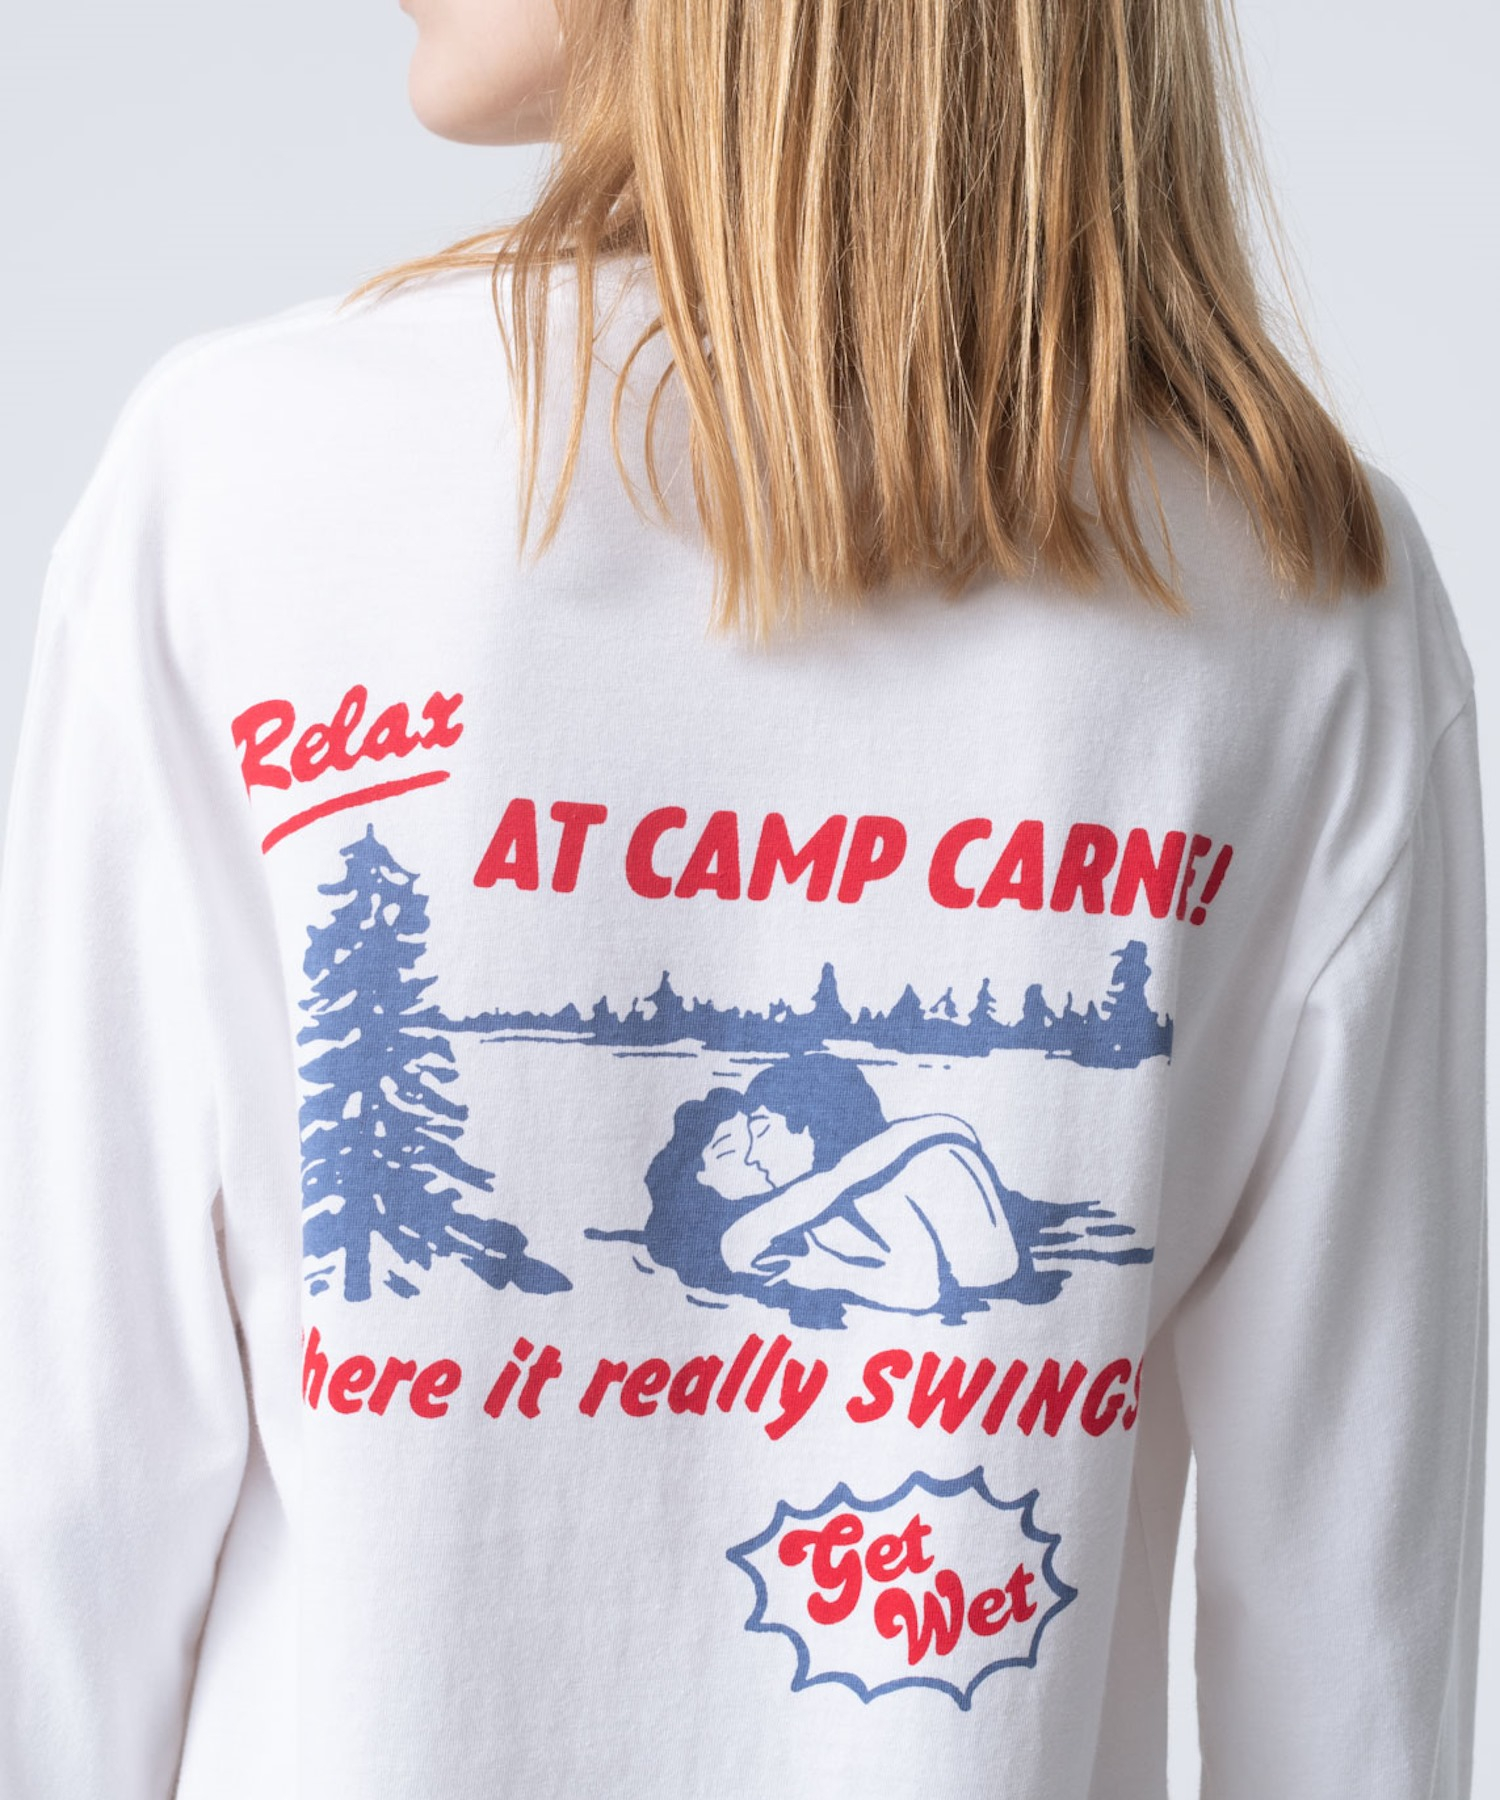 Camp Carne